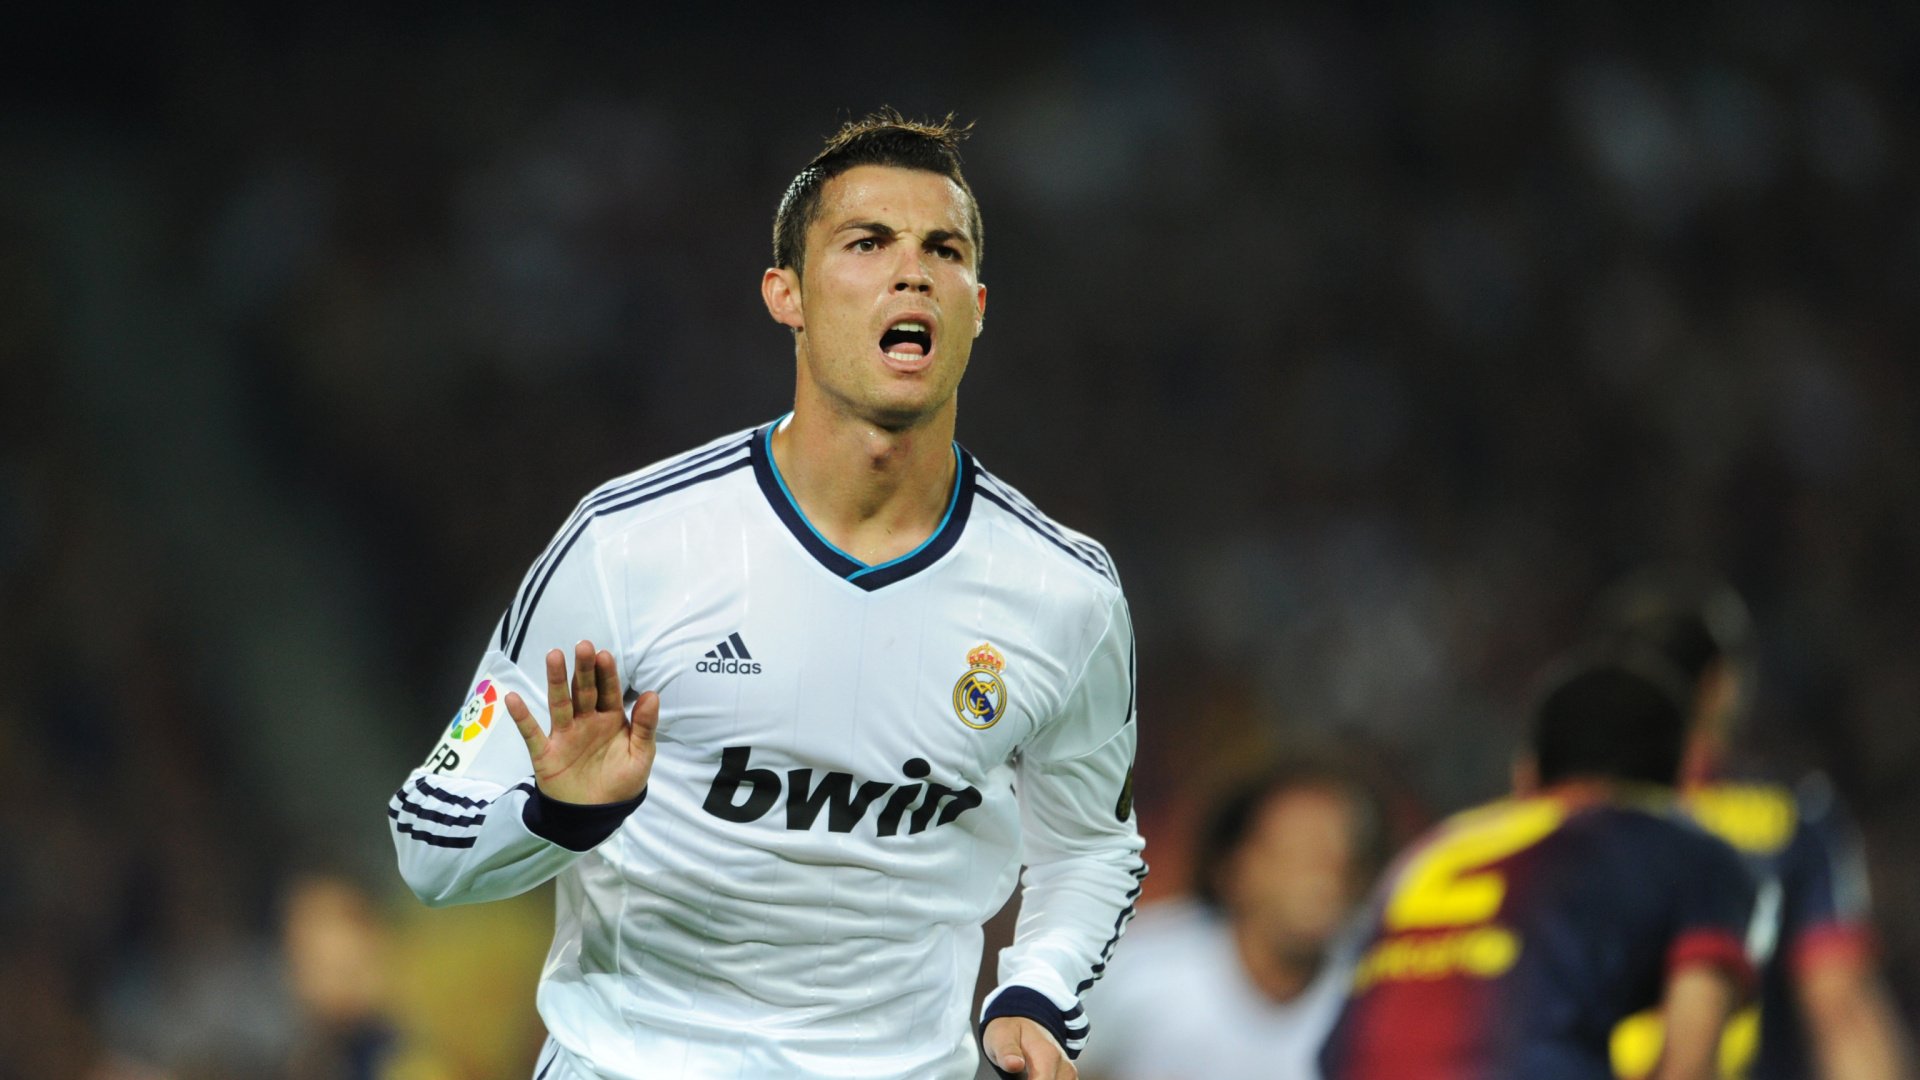 Cristiano Ronaldo Real Madrid 2011 , HD Wallpaper & Backgrounds